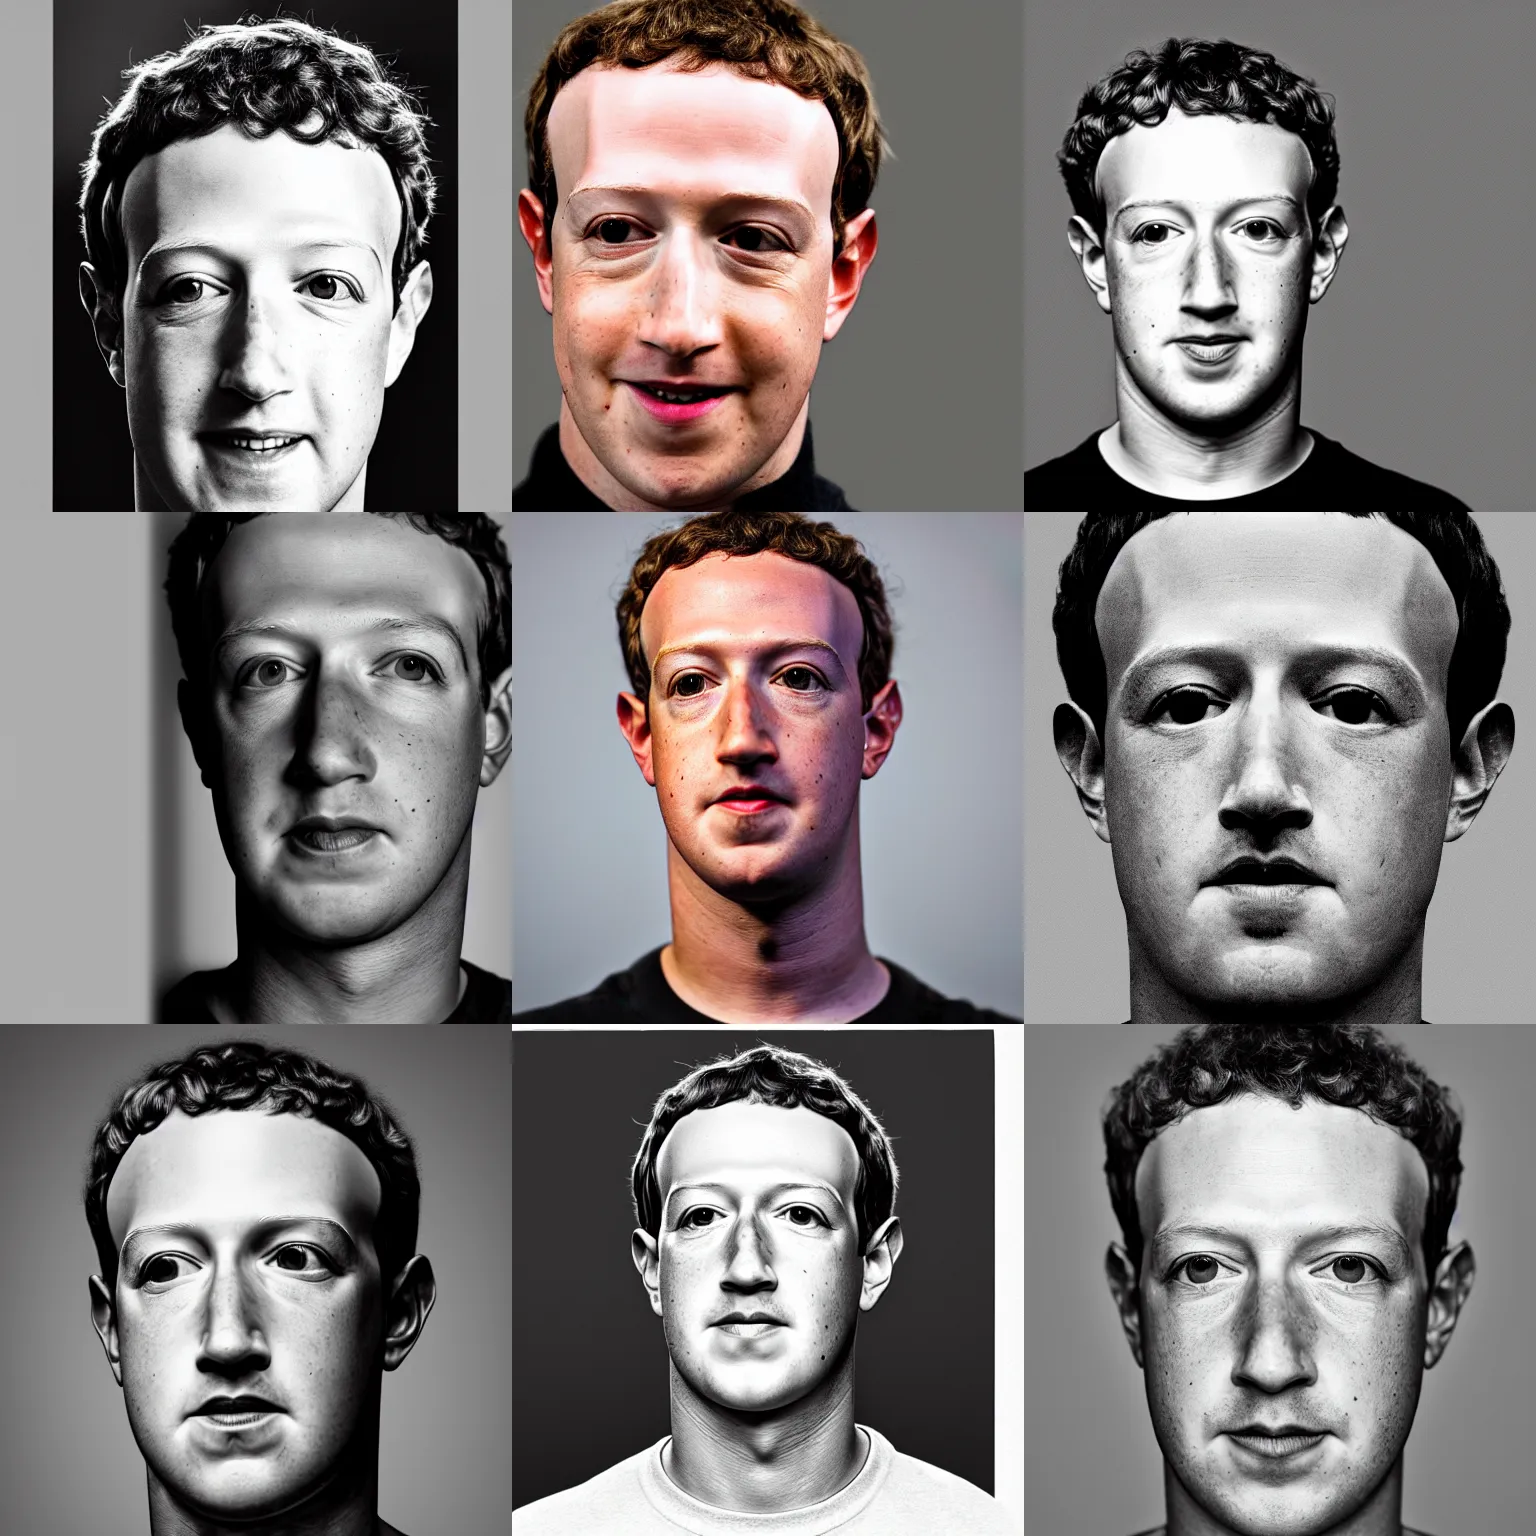 mark zuckerberg mug shot, sigma art lens | Stable Diffusion | OpenArt